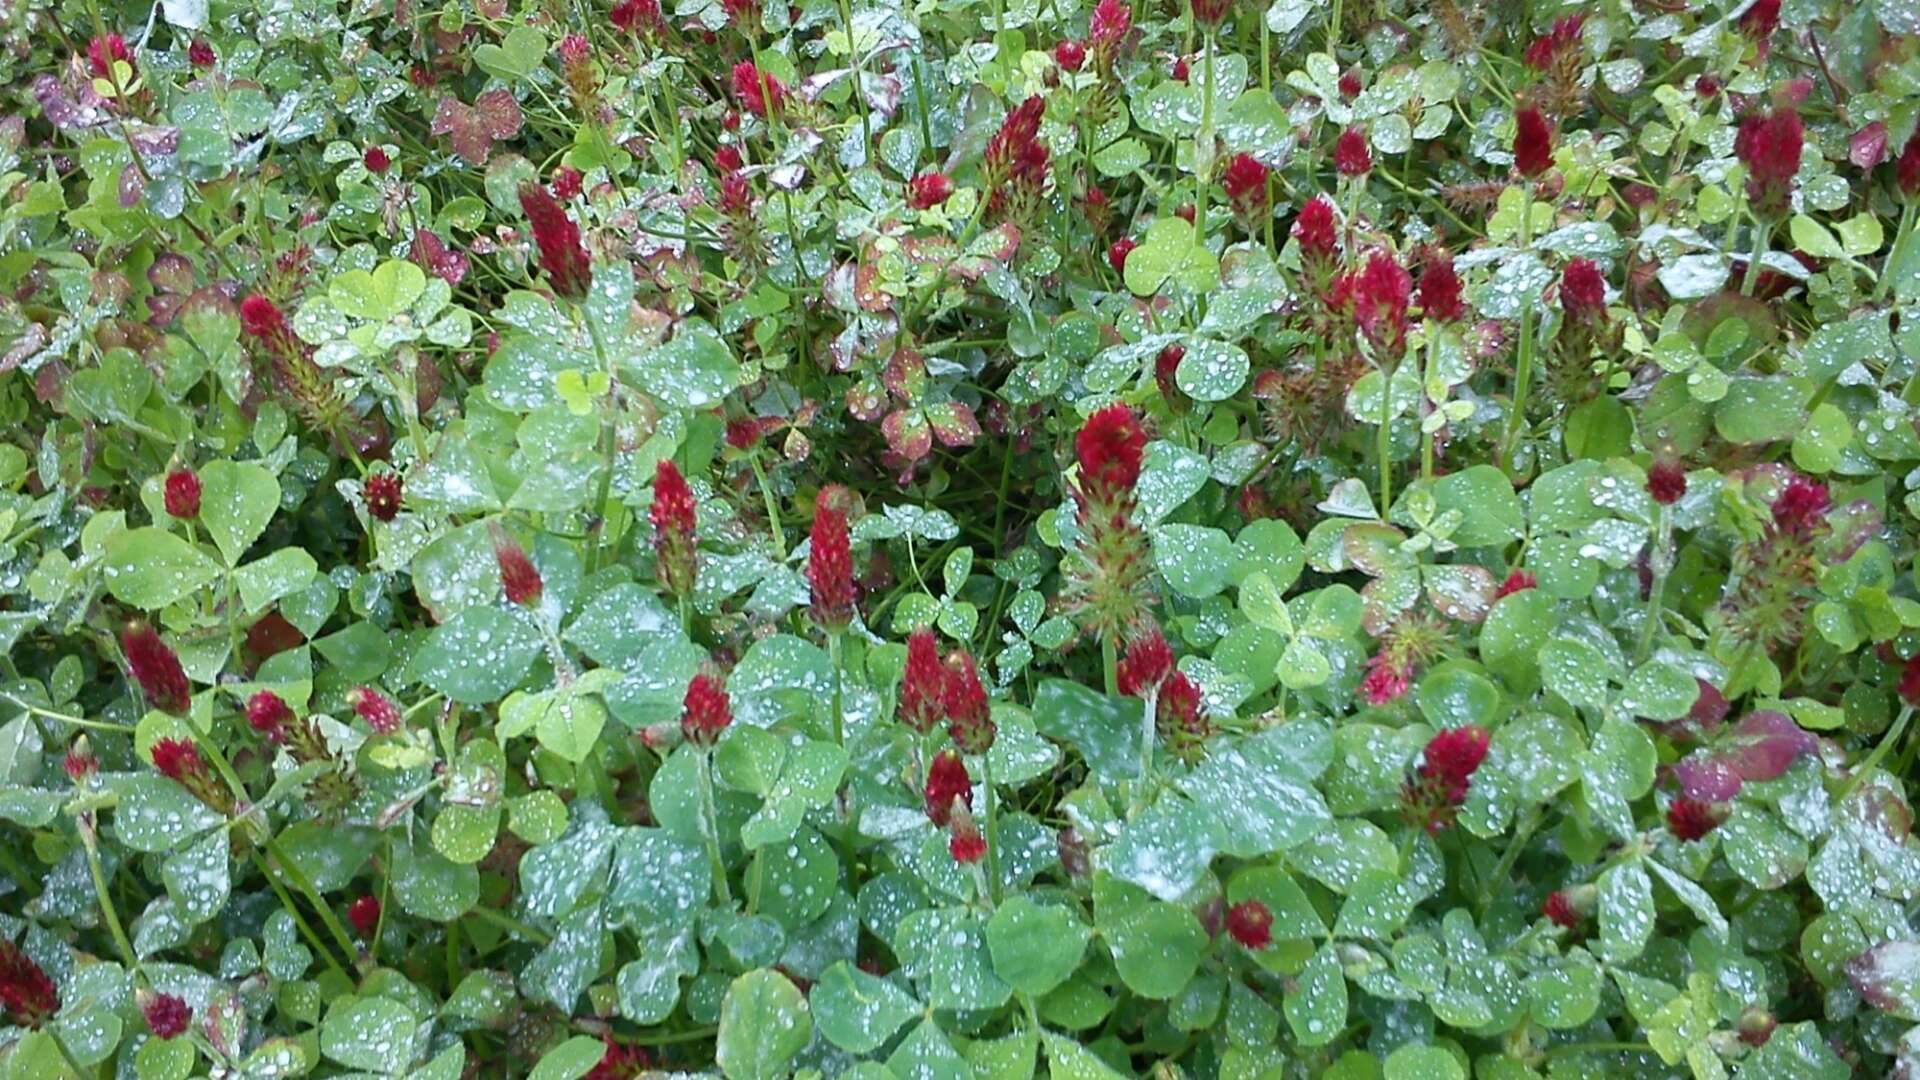 Crimson clover green manure